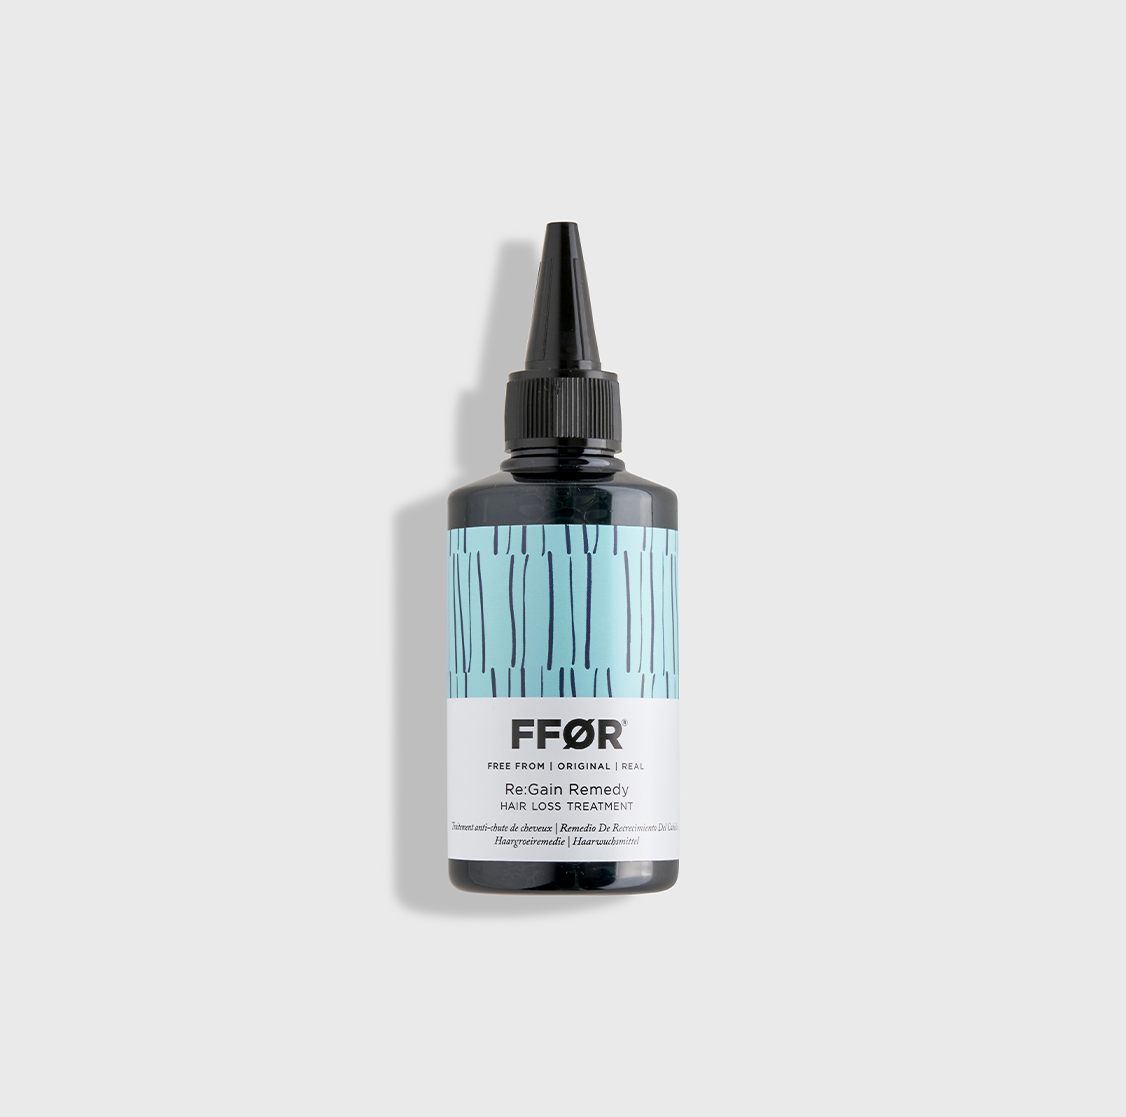 FFOR Hair regain remedy hair loss treatment bottle image  on plain backdrop